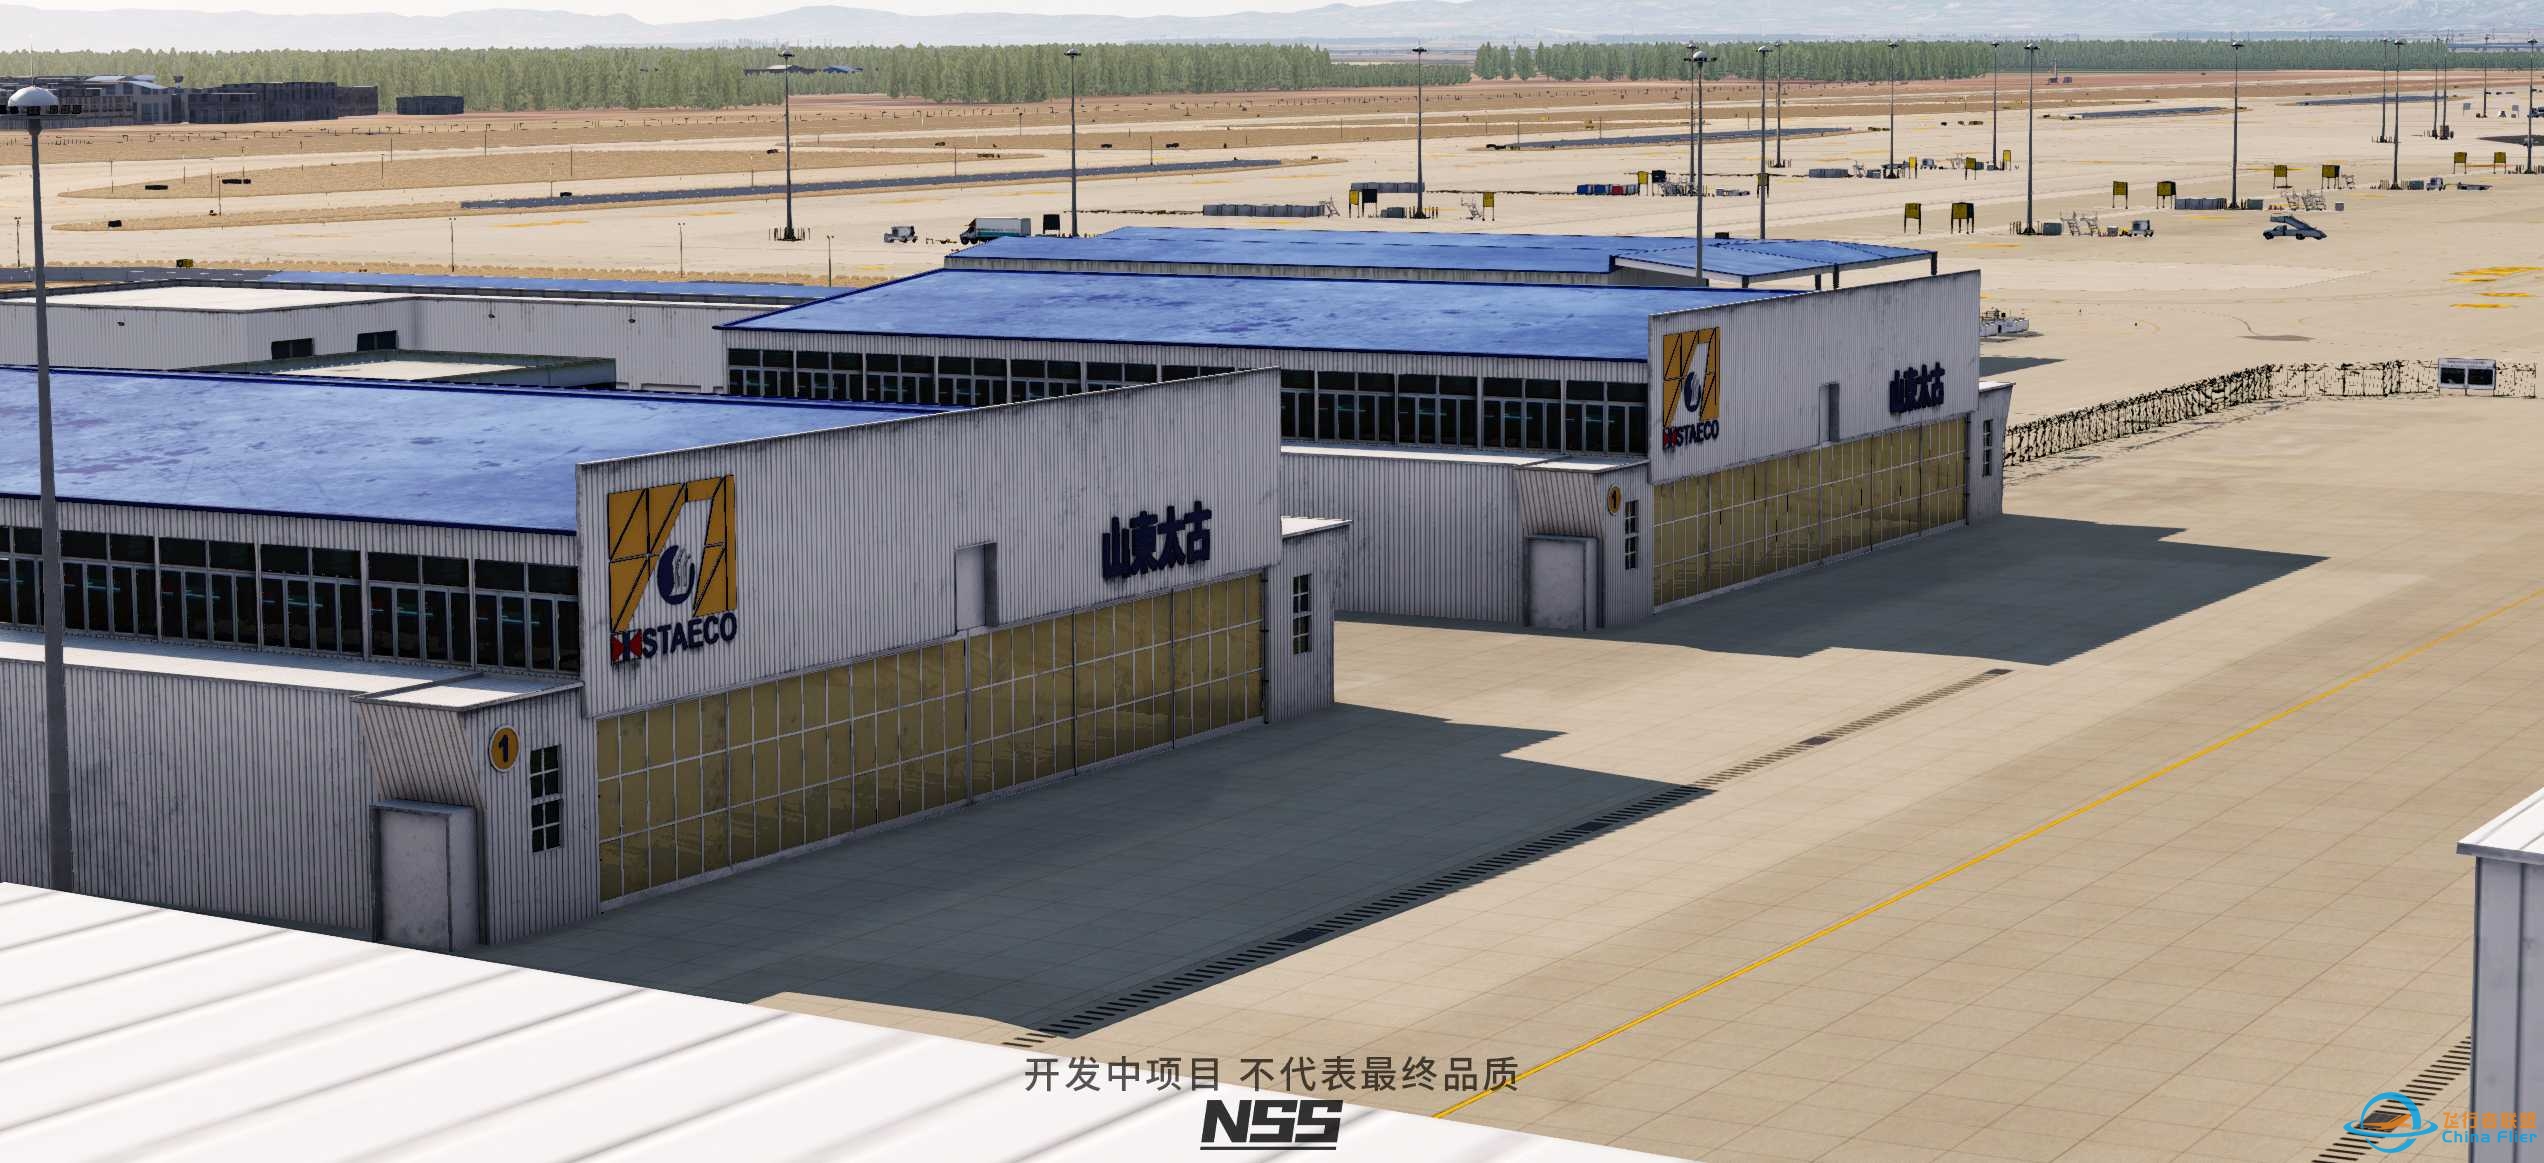 NSS地景开发组 ZSJN 济南遥墙国际机场项目预览 兼公布-9693 